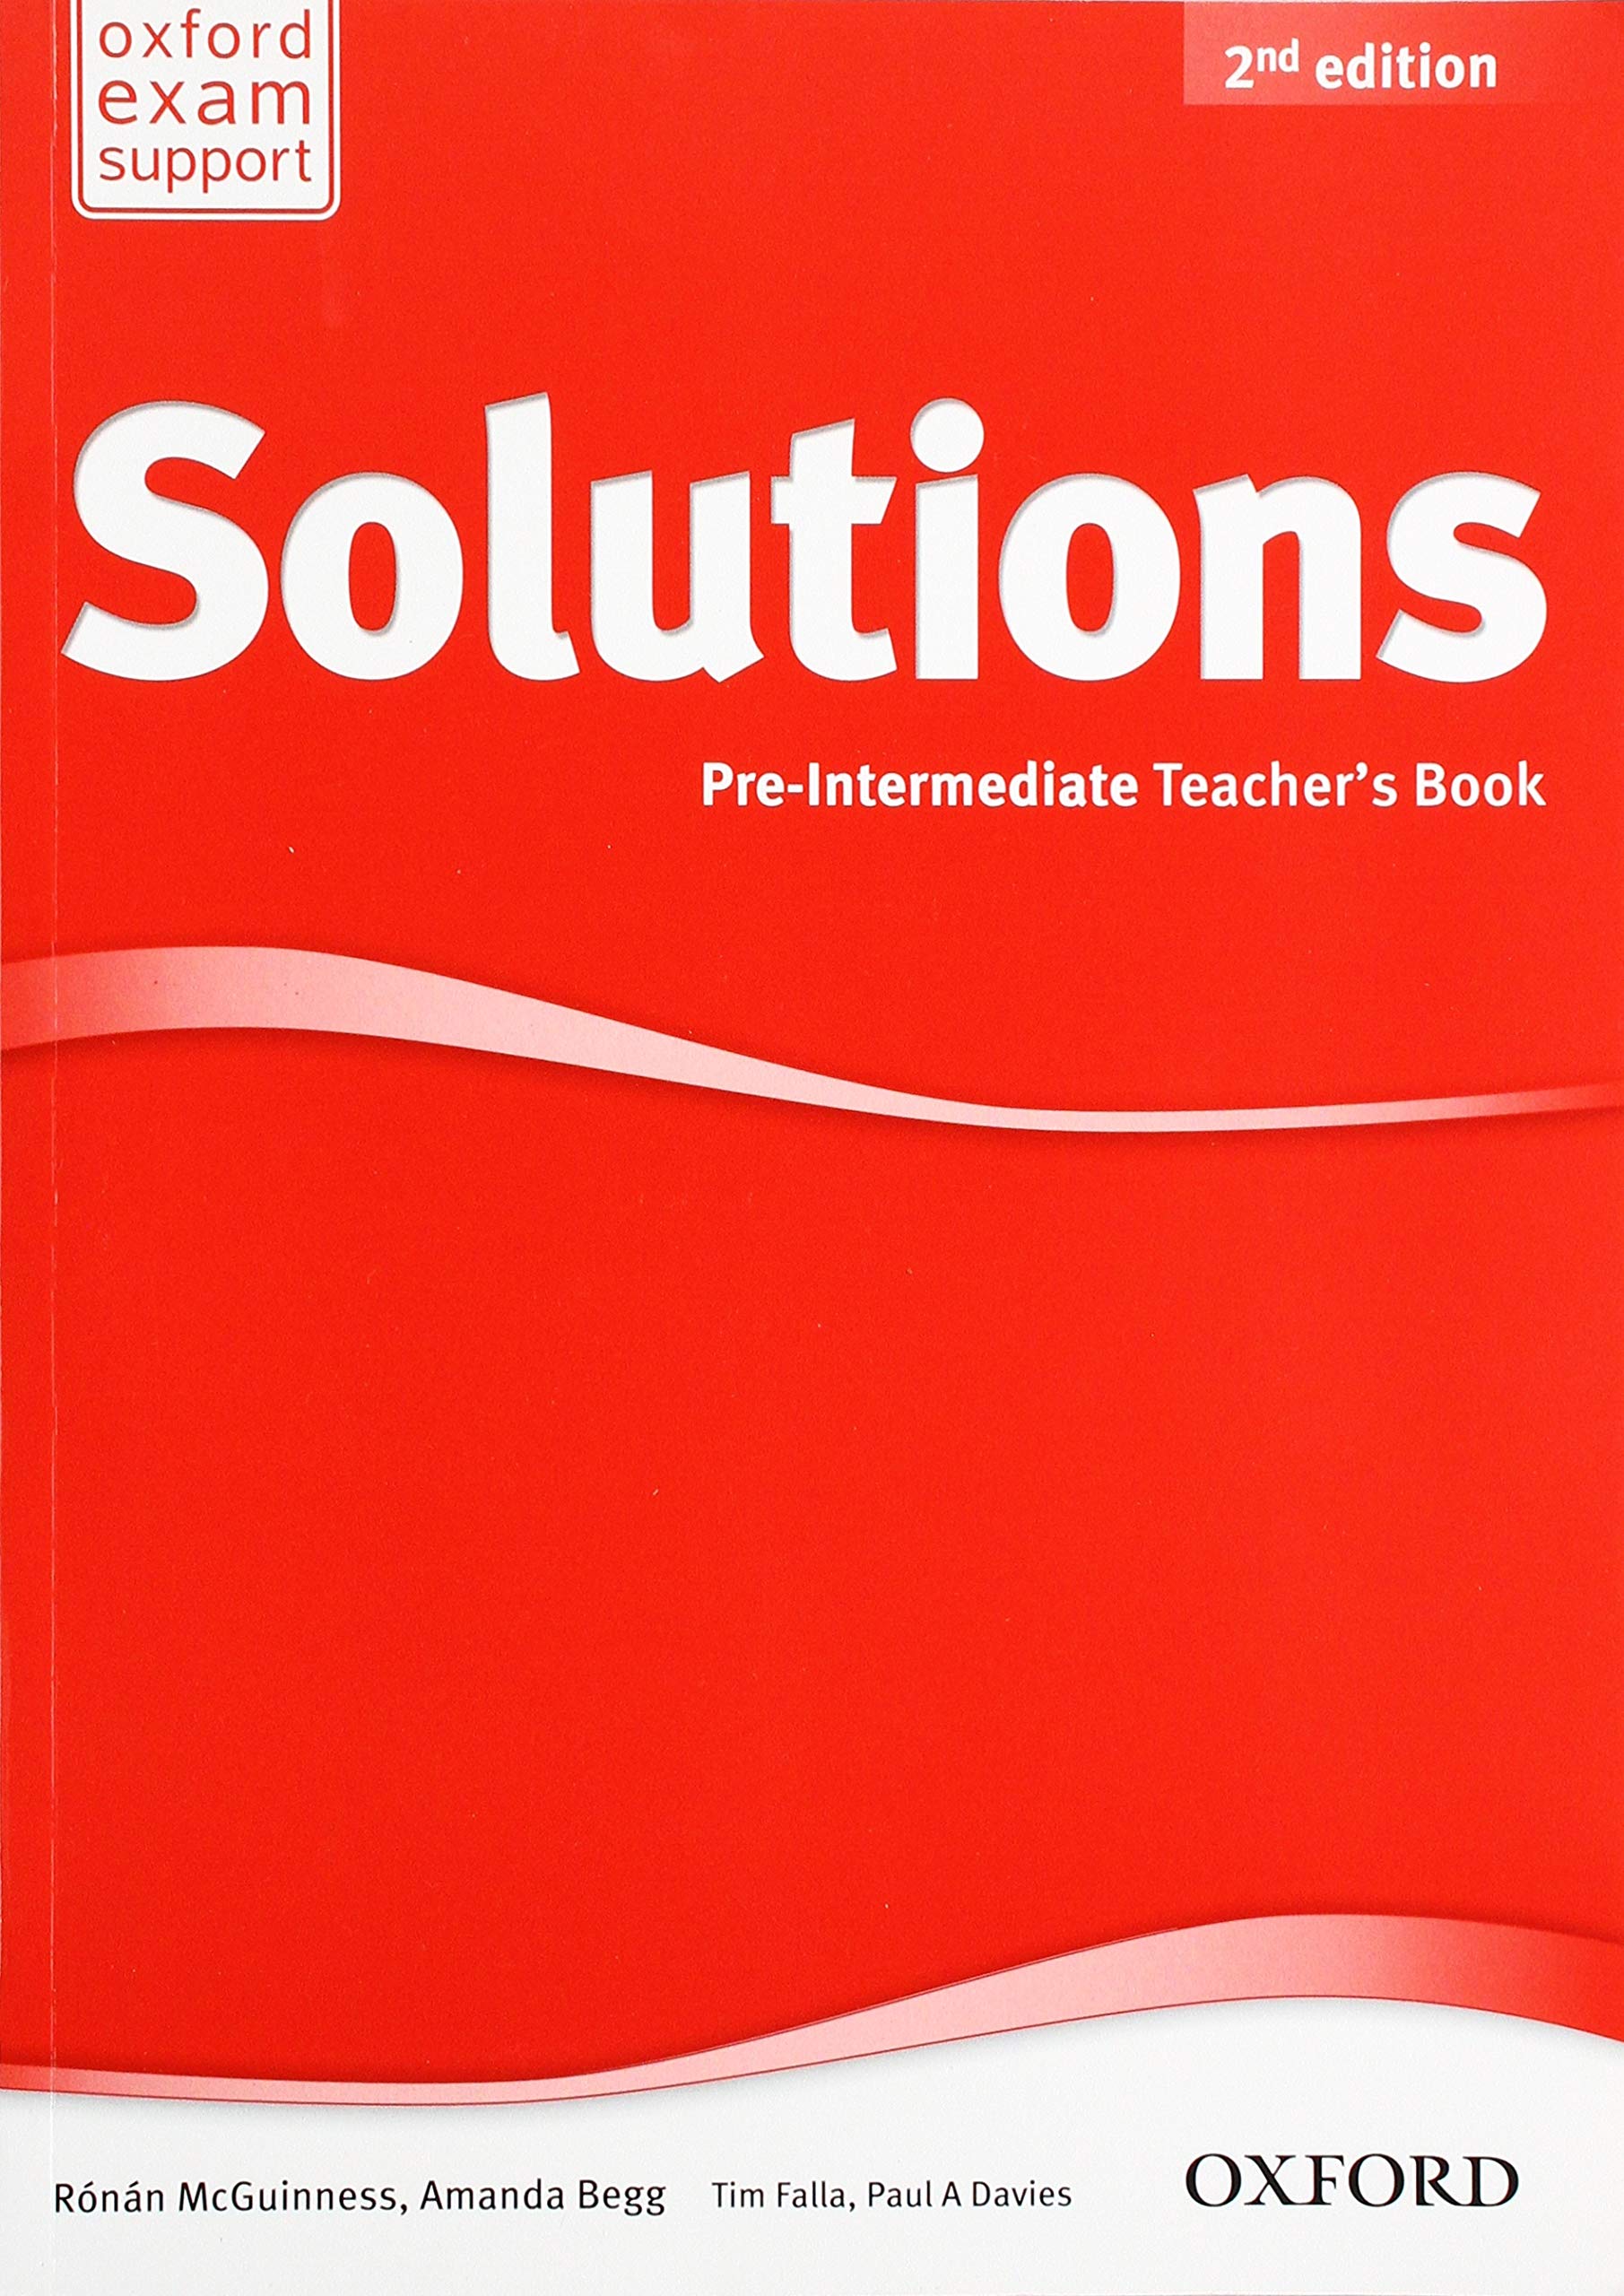 Solutions (Second Edition) Pre-Intermediate Teacher's Book / Книга для учителя